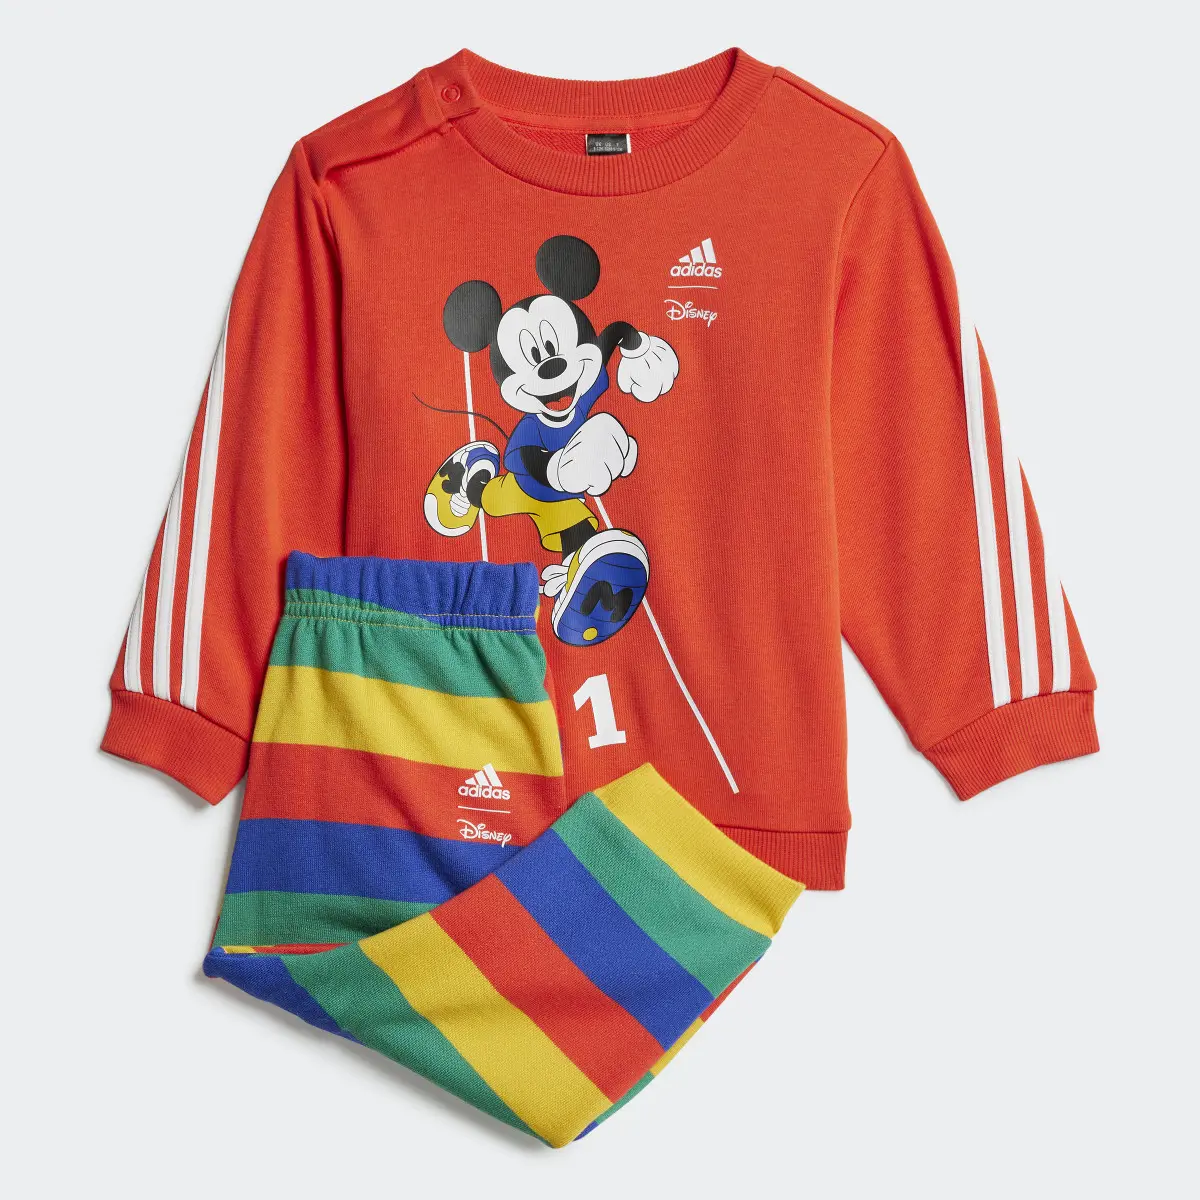 Adidas x Disney Mickey Mouse Jogger. 1